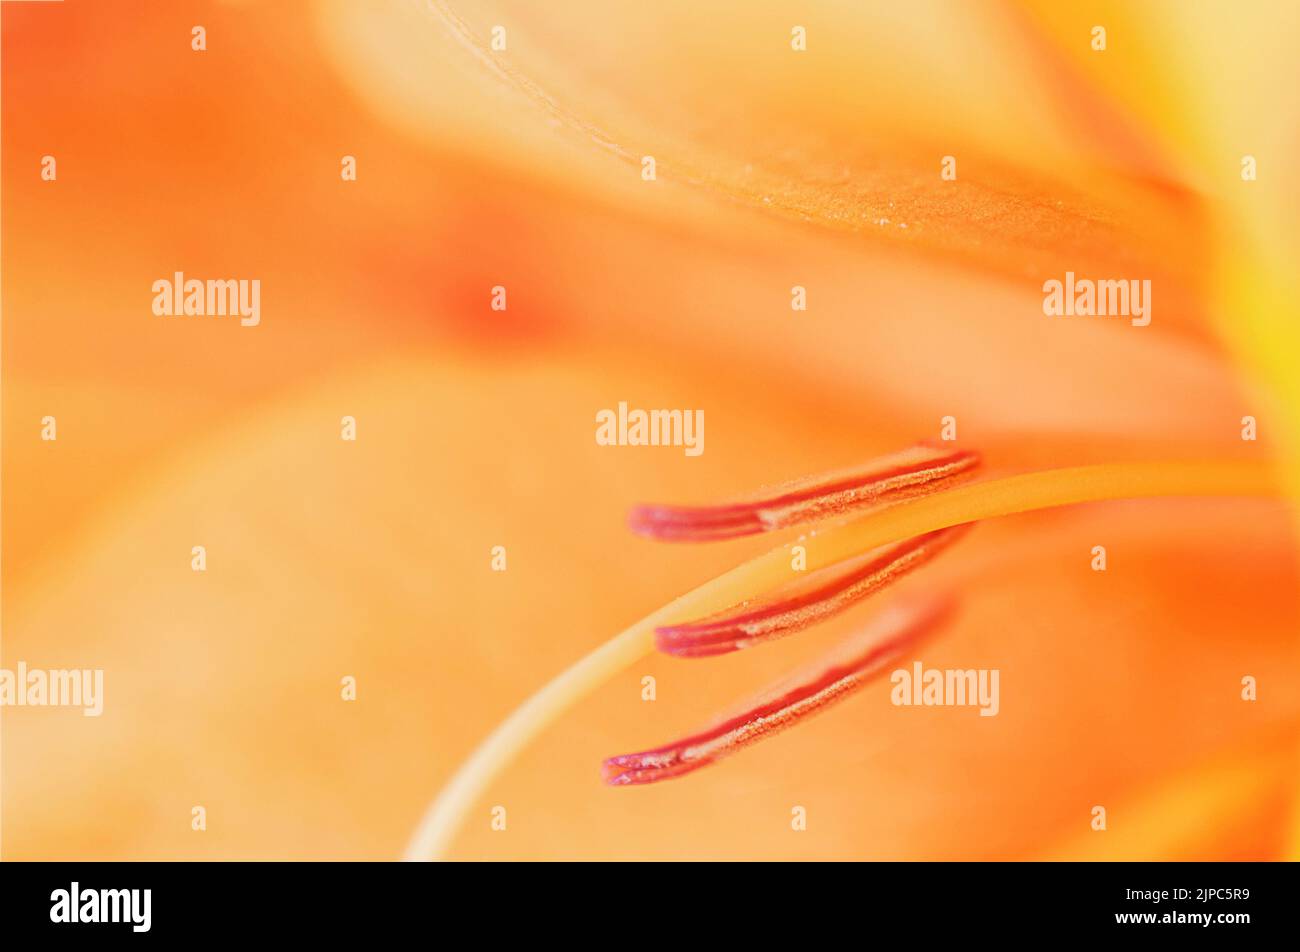 Orange gladiolus  macro photo, abstract natural background Stock Photo